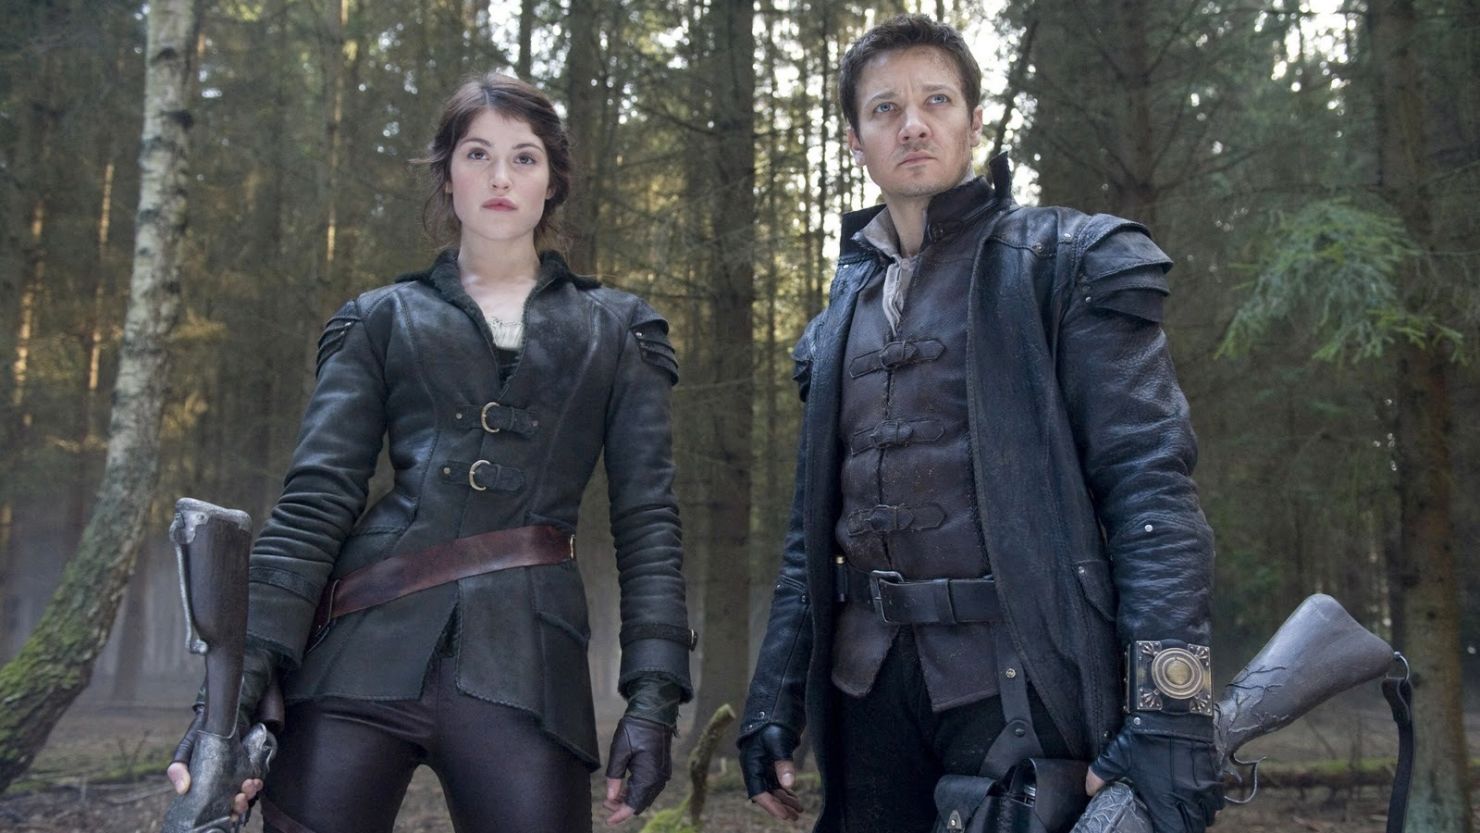 Gemma Arterton and Jeremy Renner star in "Hansel & Gretel: Witch Hunters."